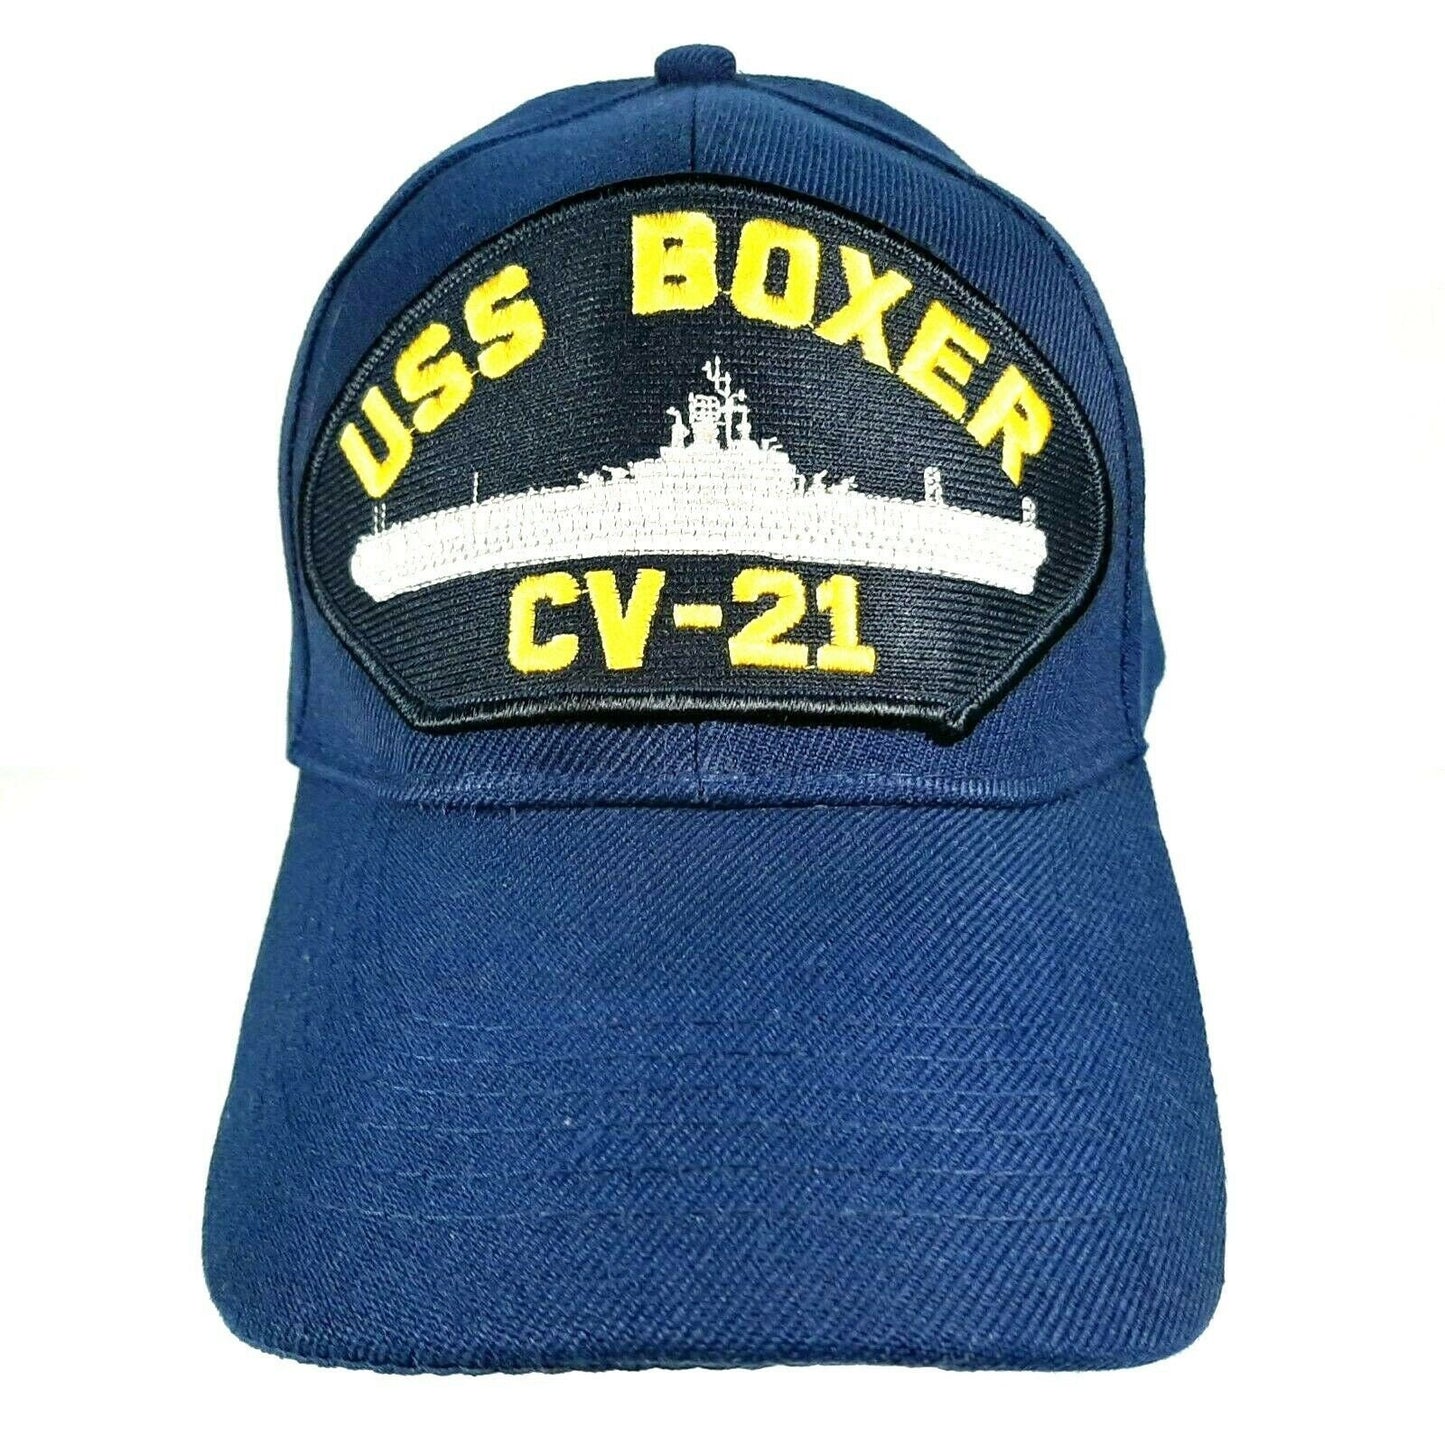 U.S. Navy USS Boxer CV-21 Men's Patch Cap Hat Navy Blue Acrylic